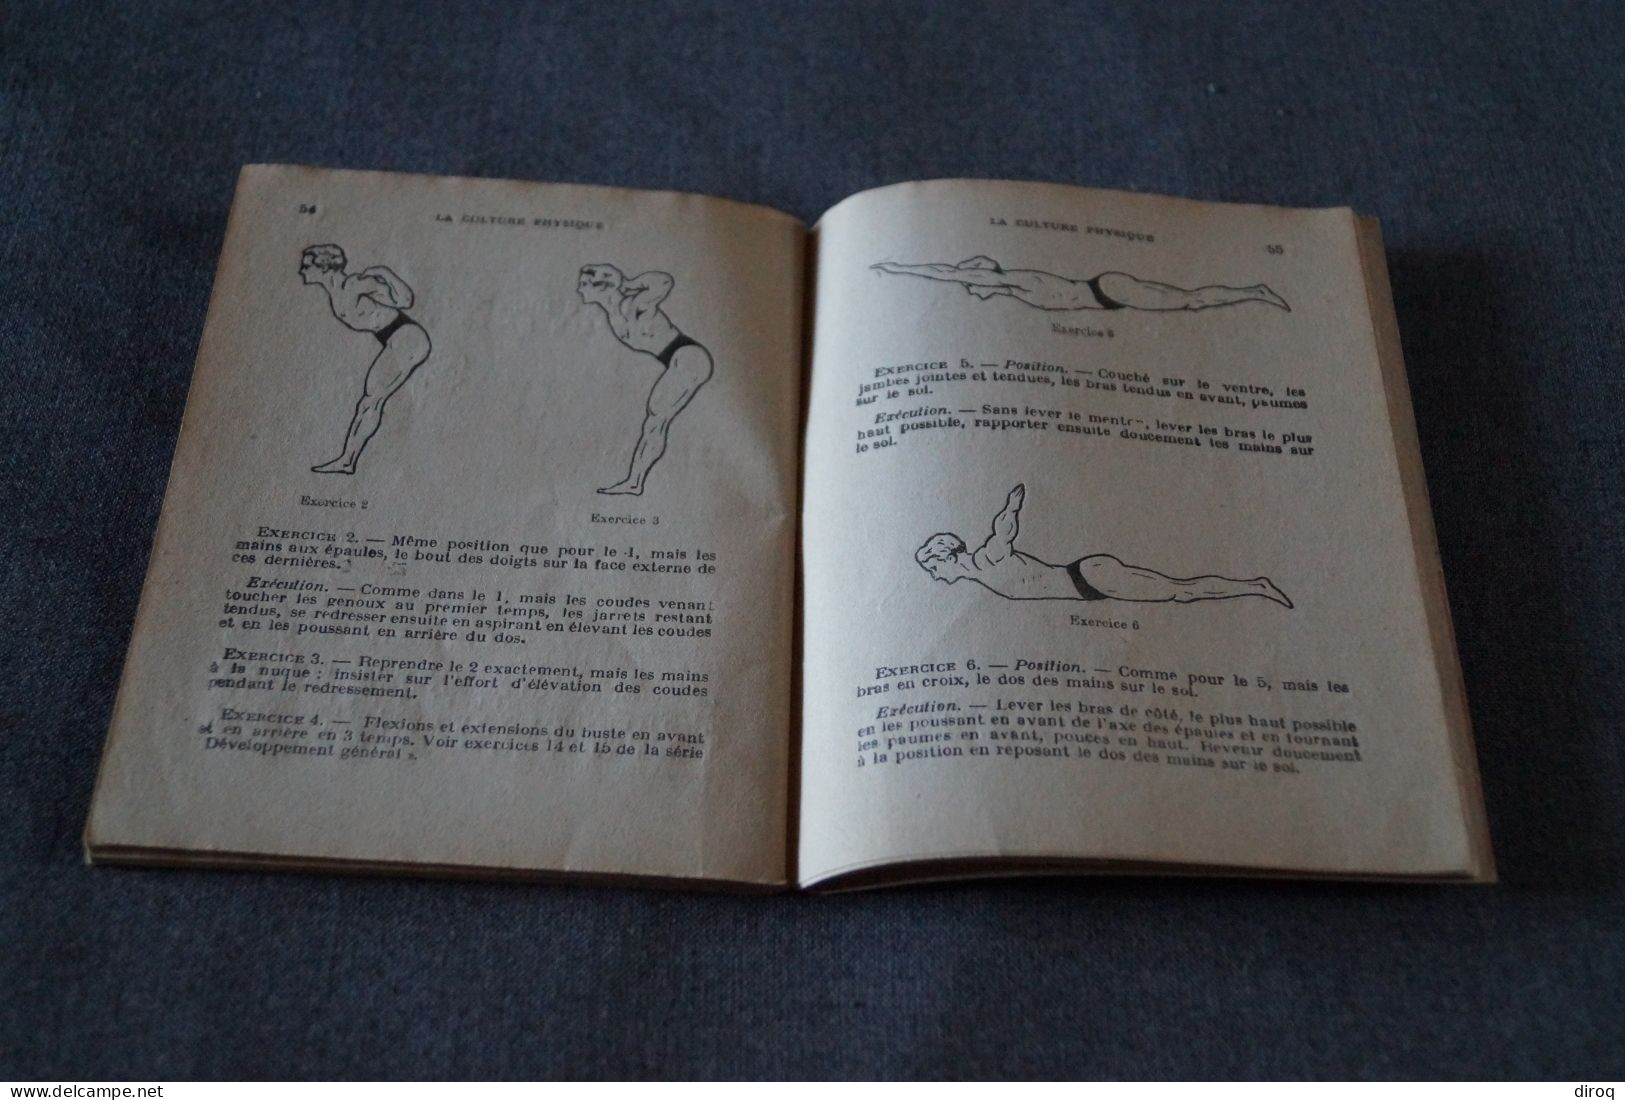 Culture physique,Rodolphe Trachet,complet 64 pages,ancien,complet